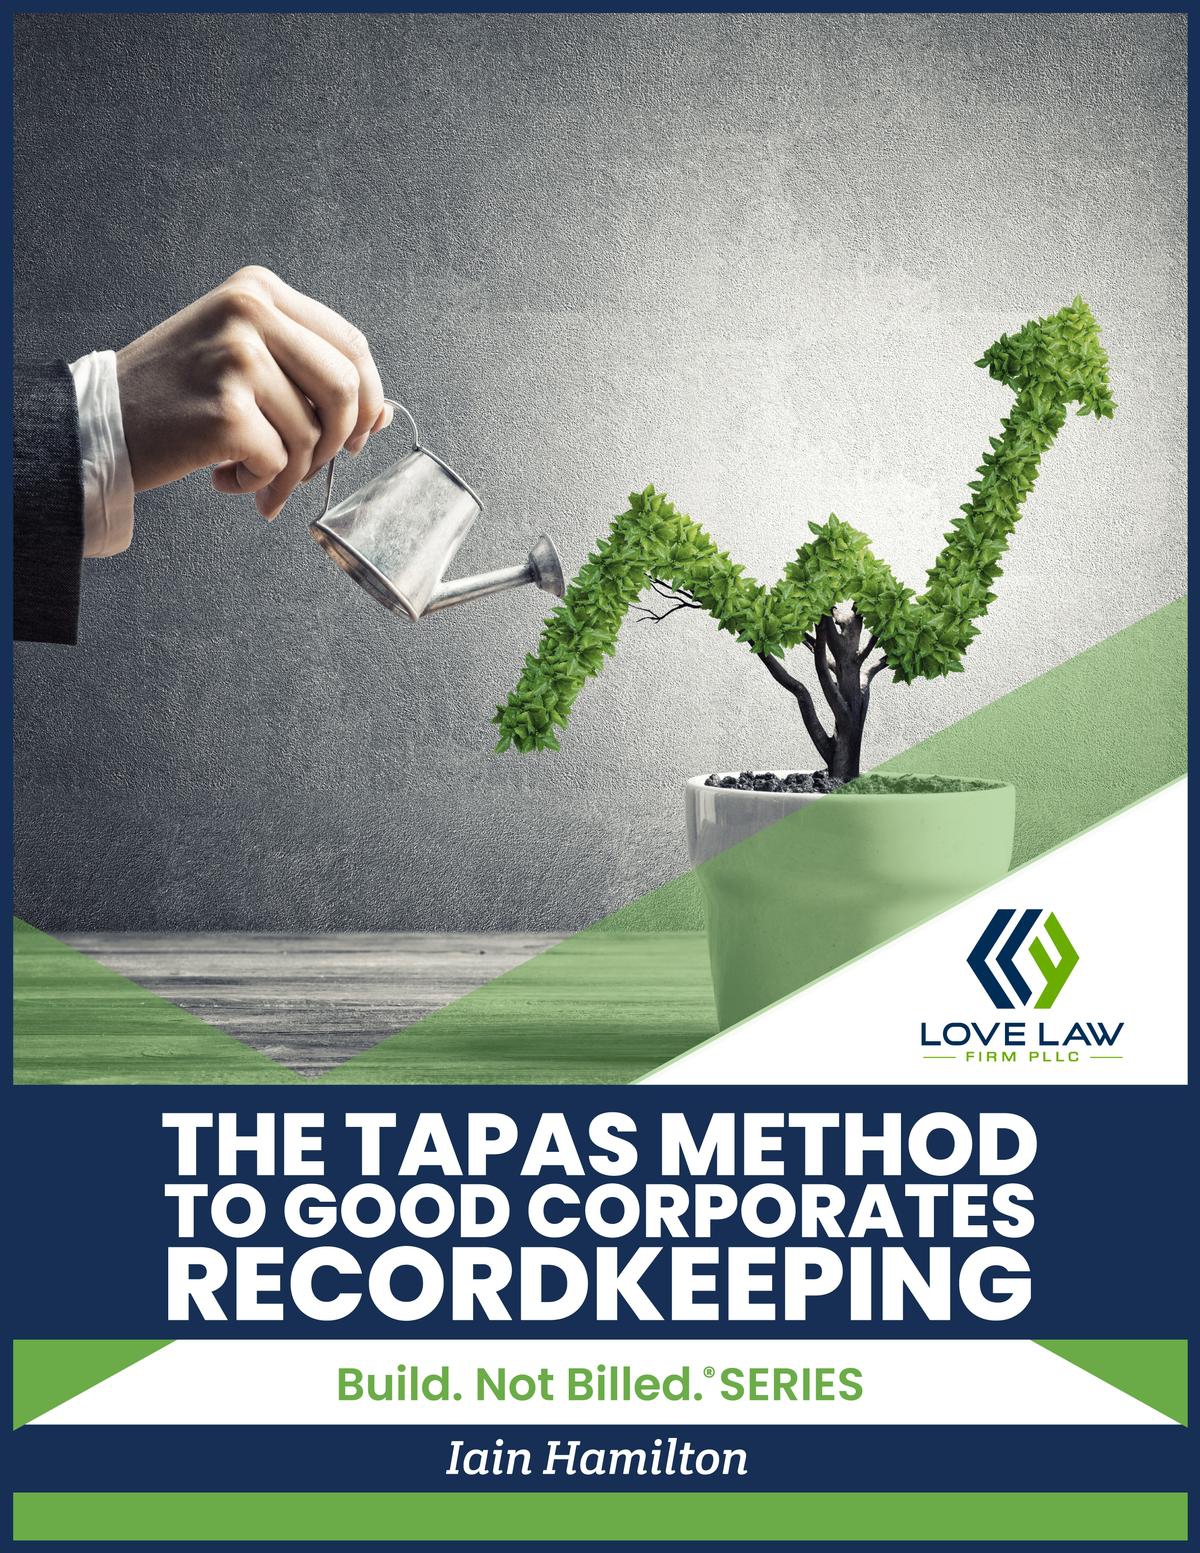 TAPAS Method of Corporate Recordkeeping